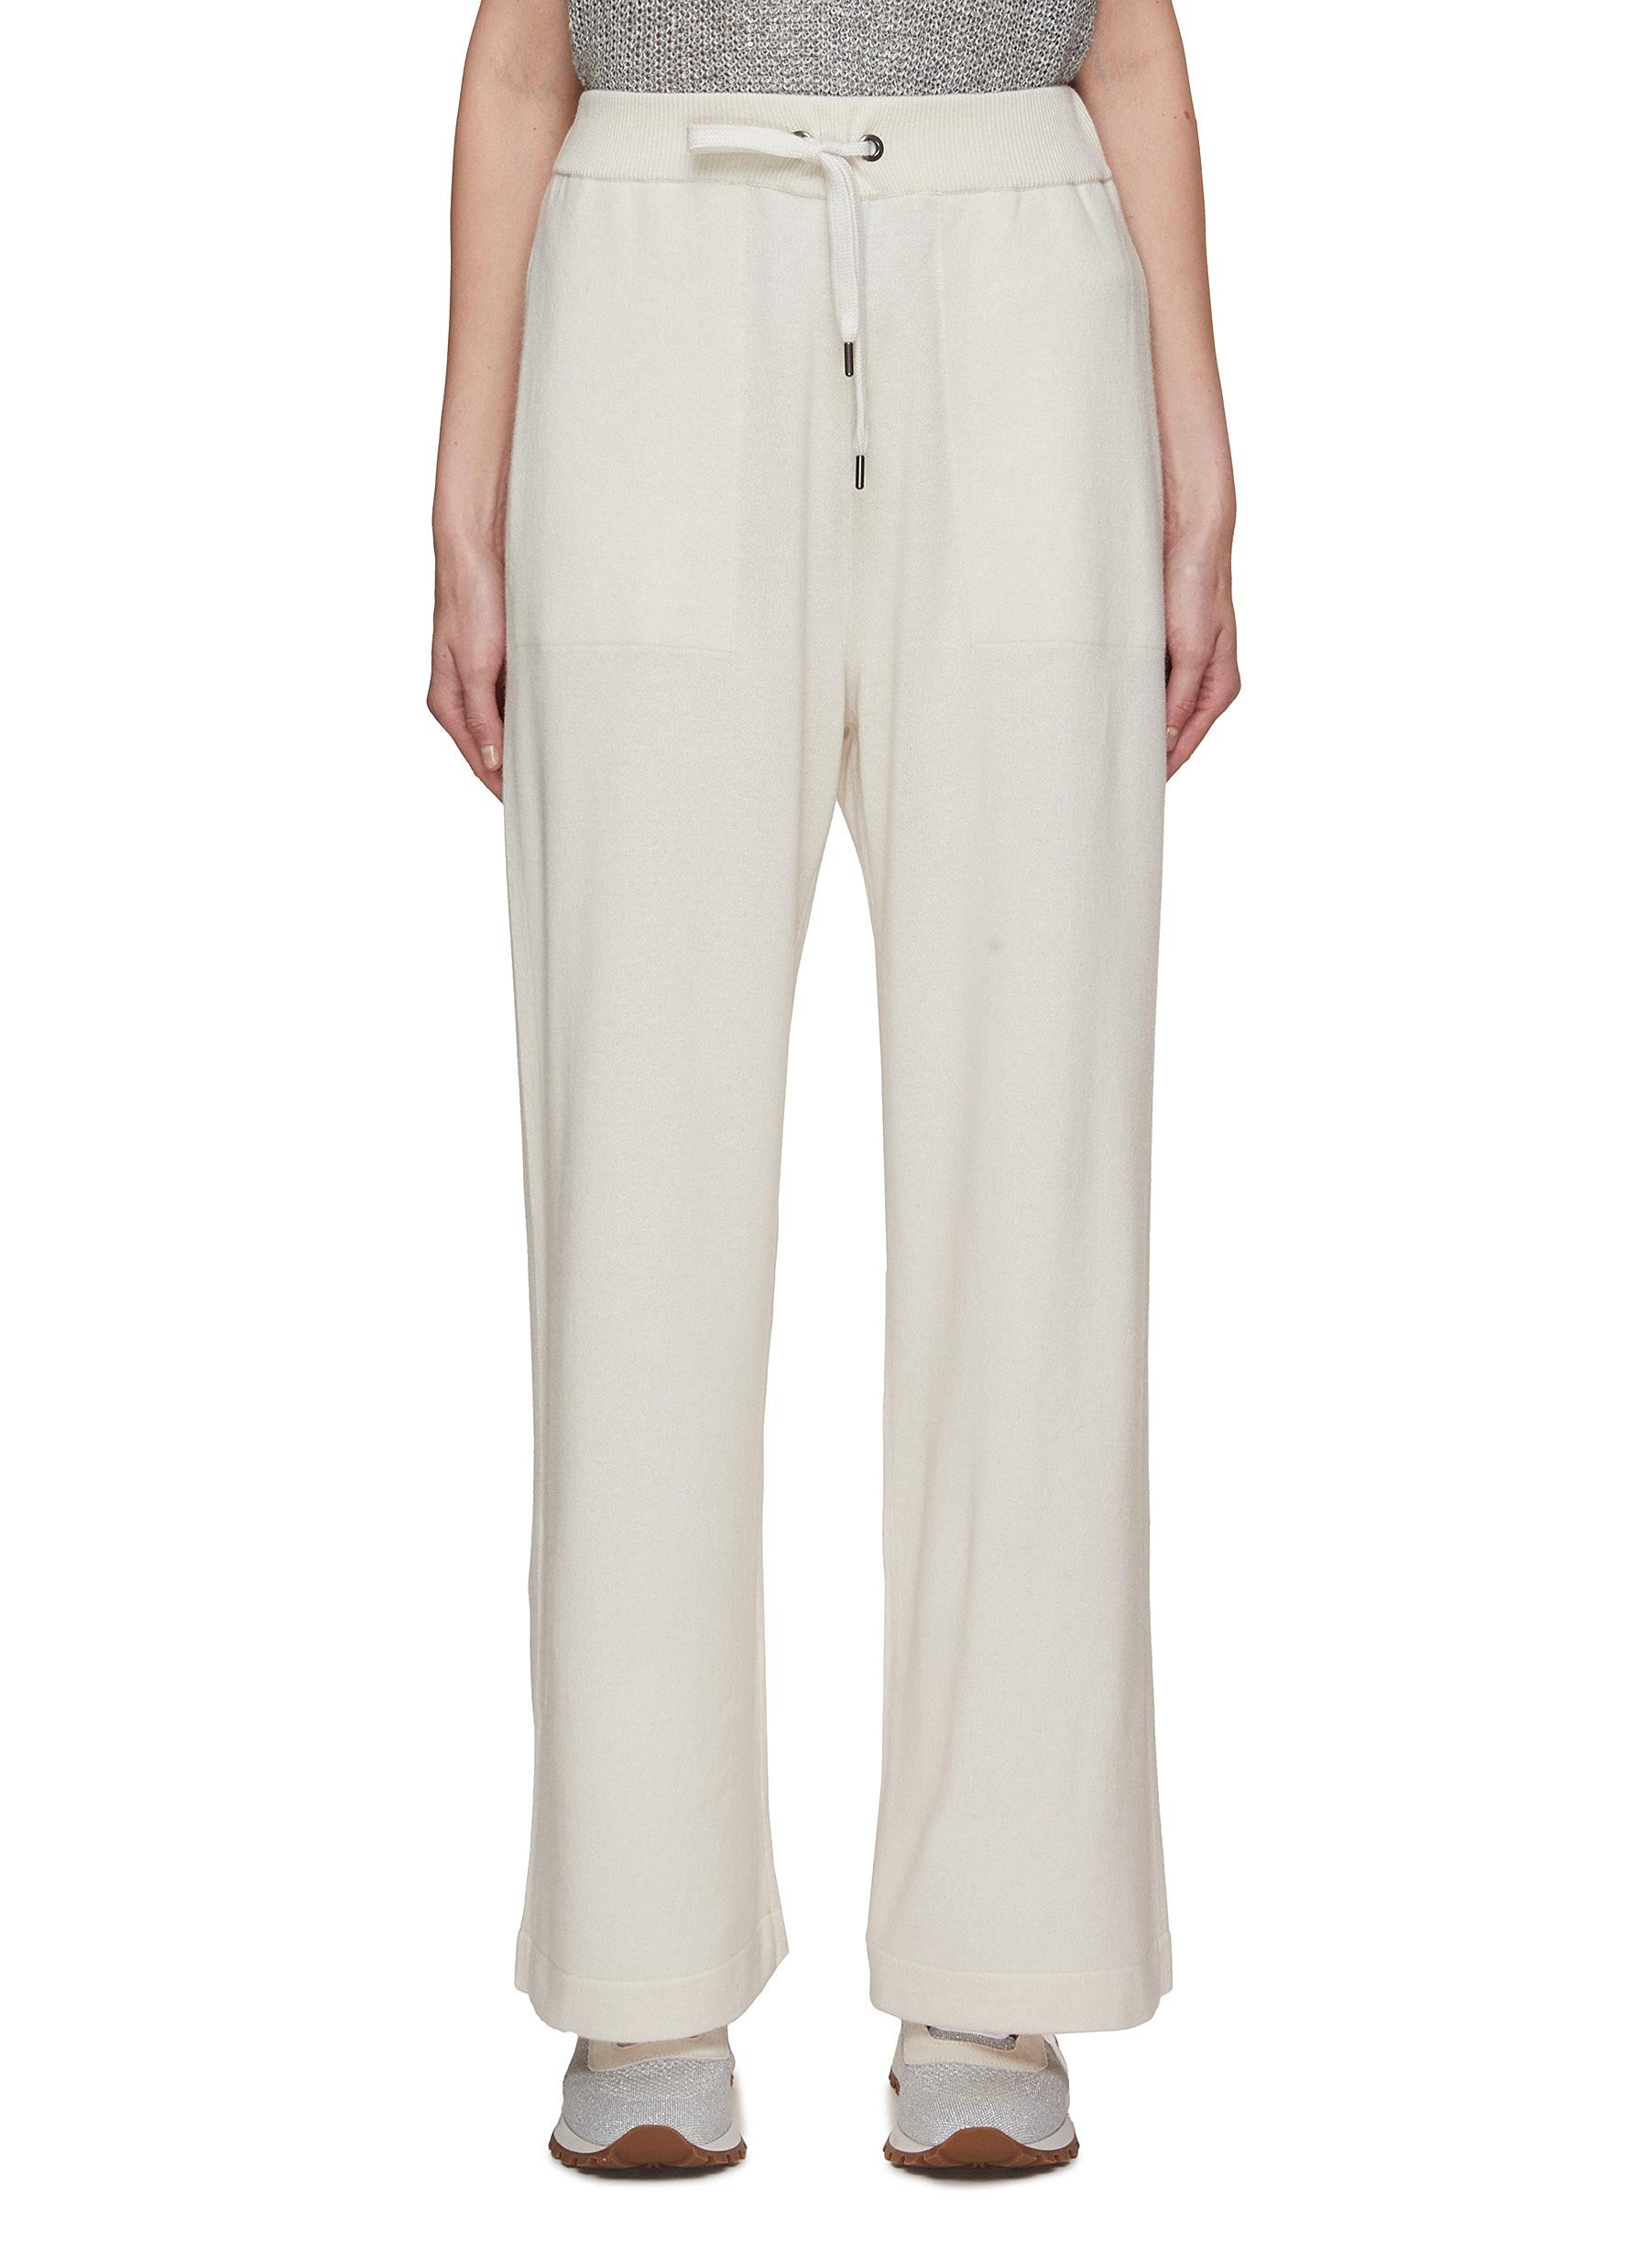 Pants - White cashmere pants